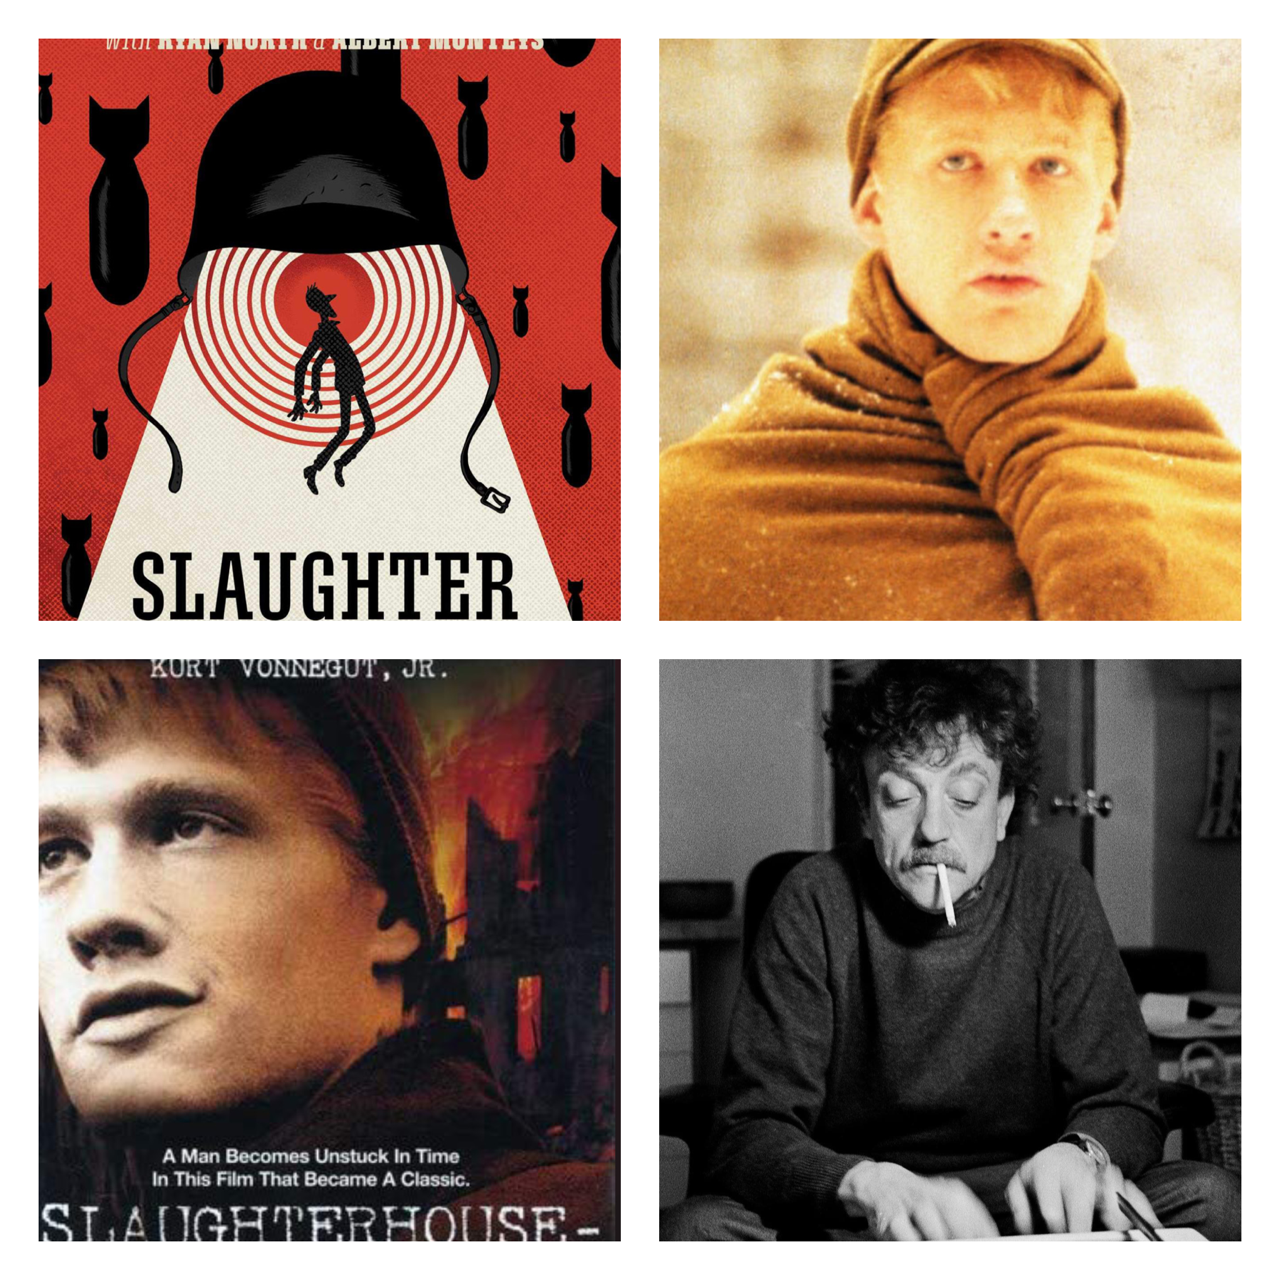 Book Vs. Movie “Slaughterhouse Five”